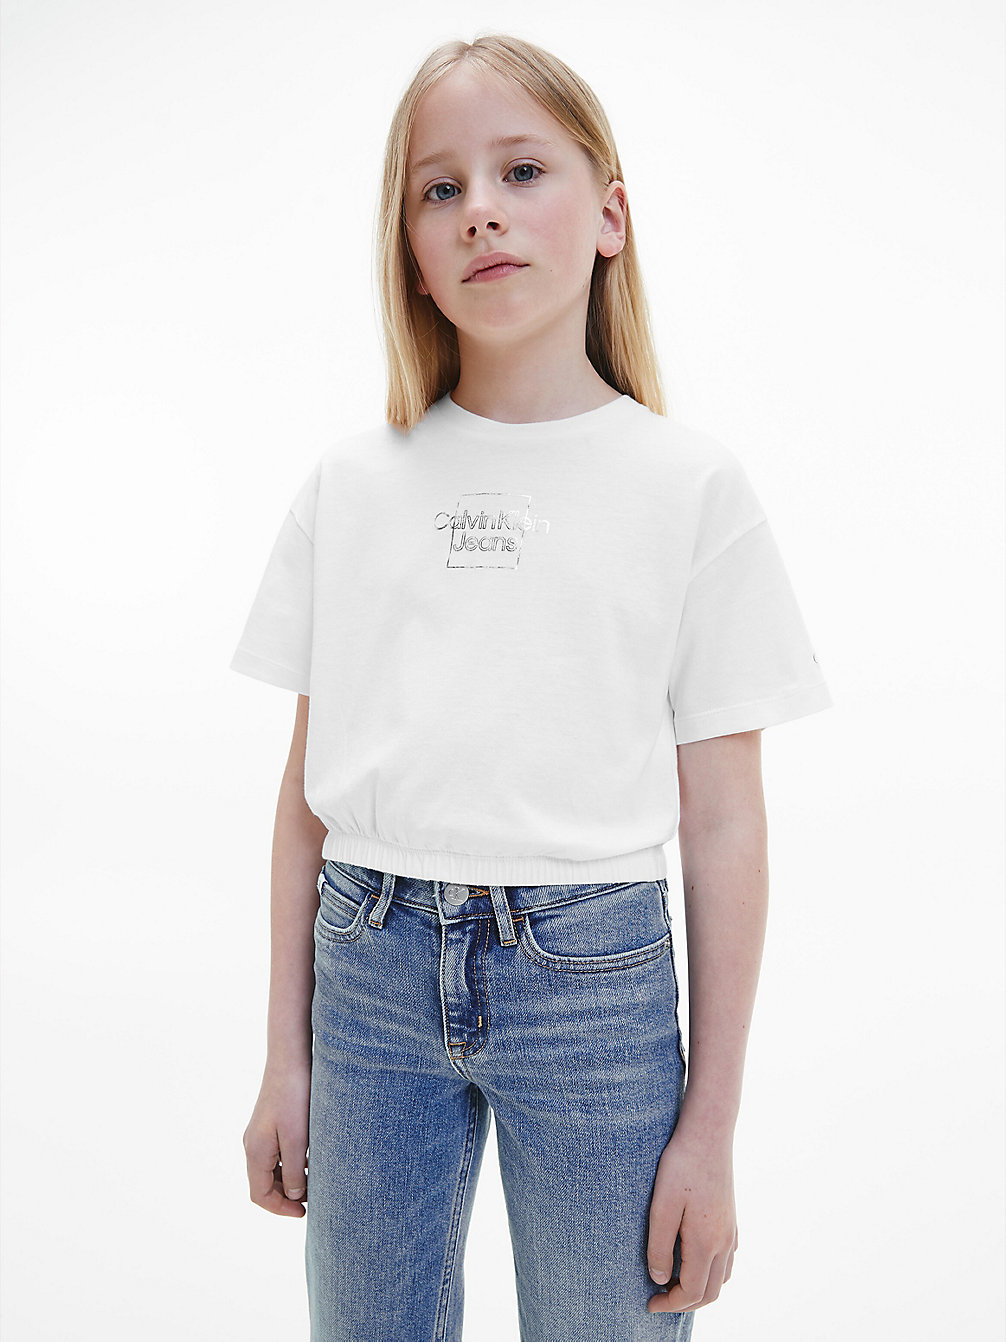 T-Shirt Corta In Cotone Biologico > BRIGHT WHITE > undefined girls > Calvin Klein